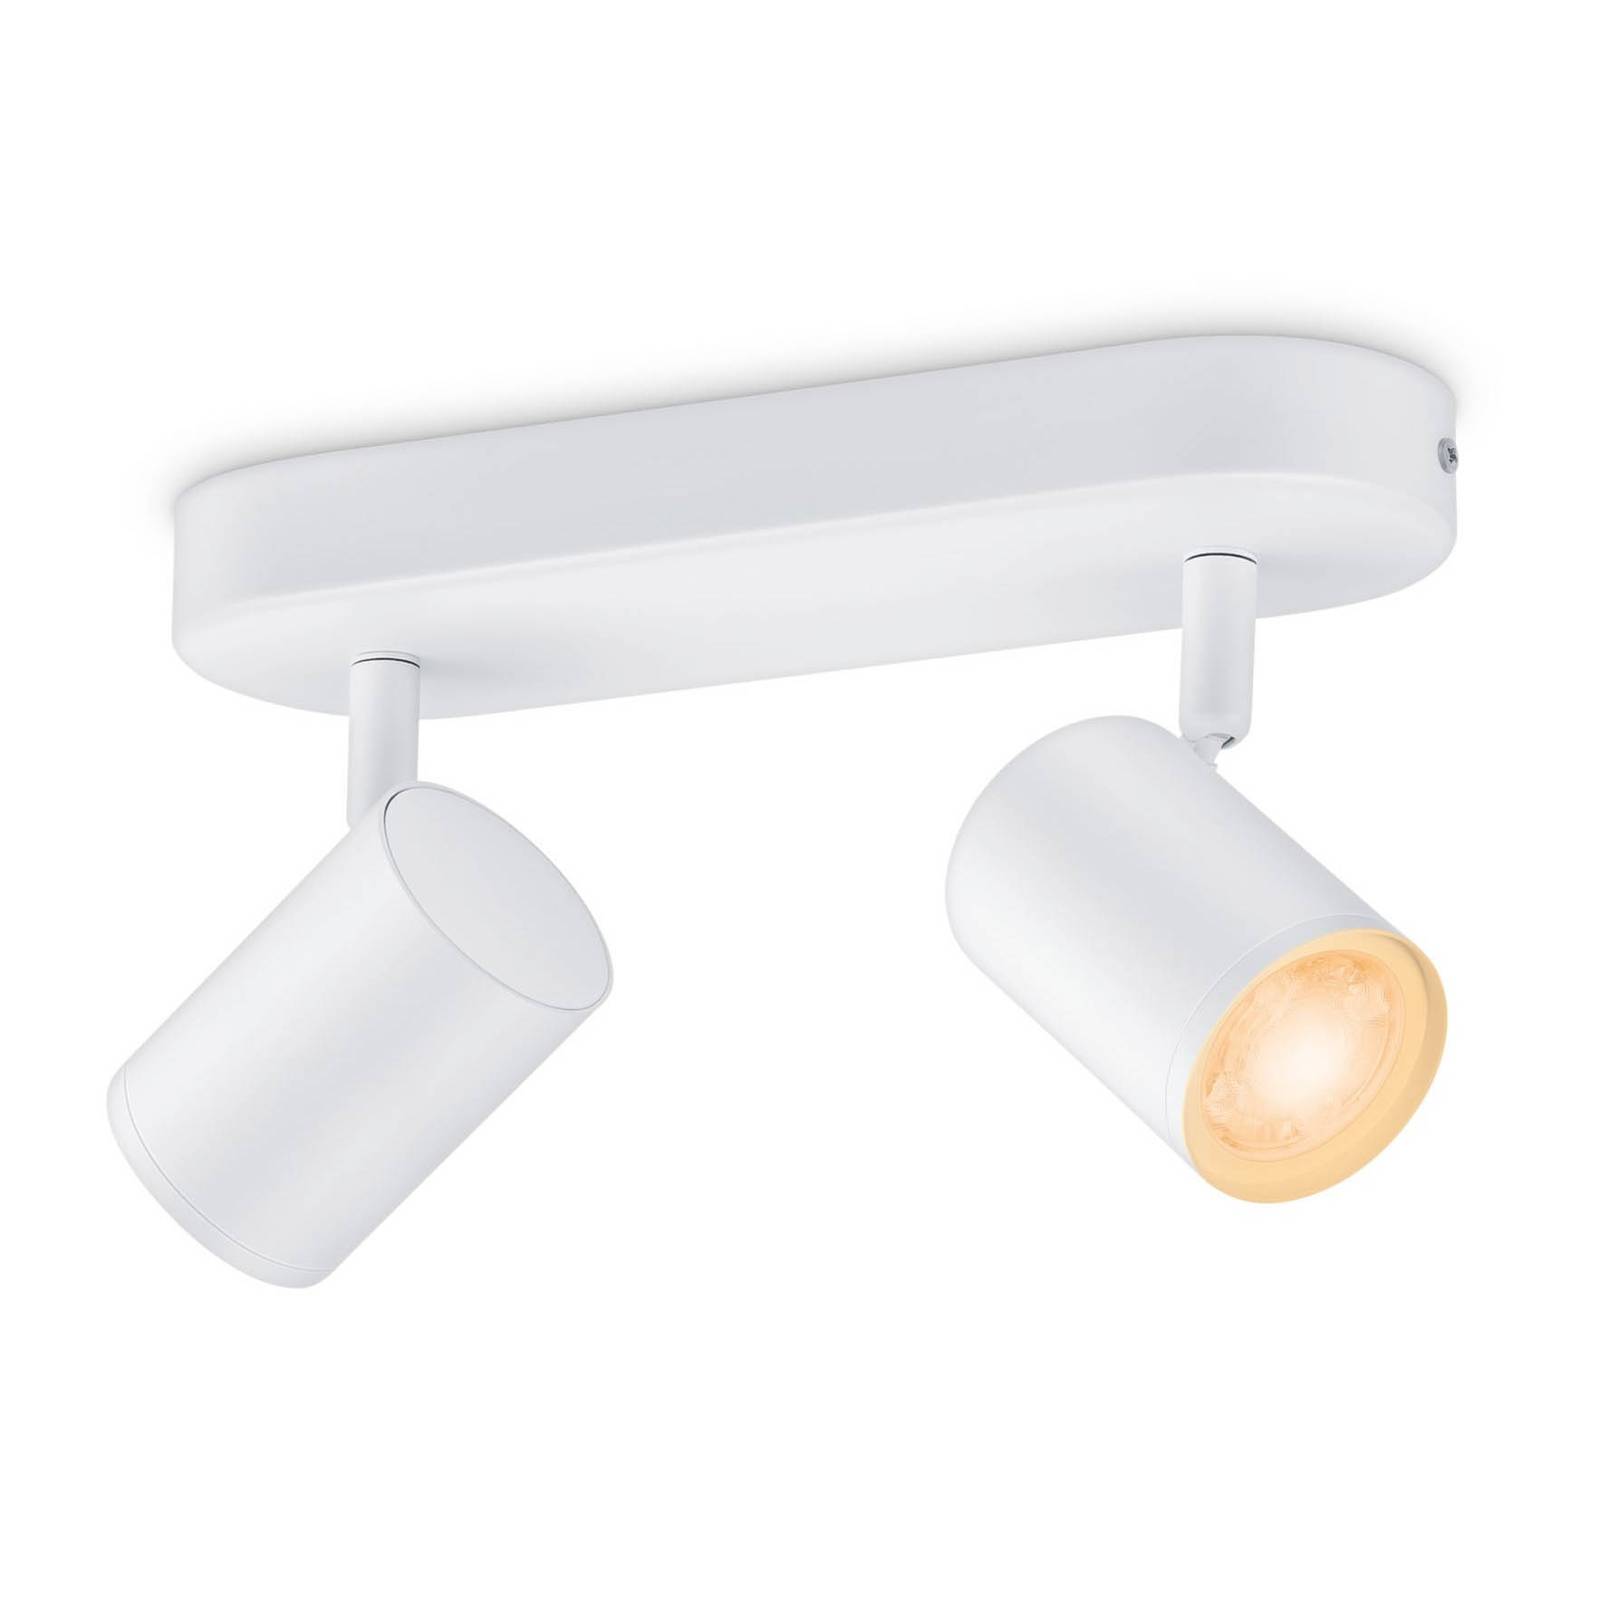 WiZ Imageo spot LED, 2 lampes, RVB, blanc